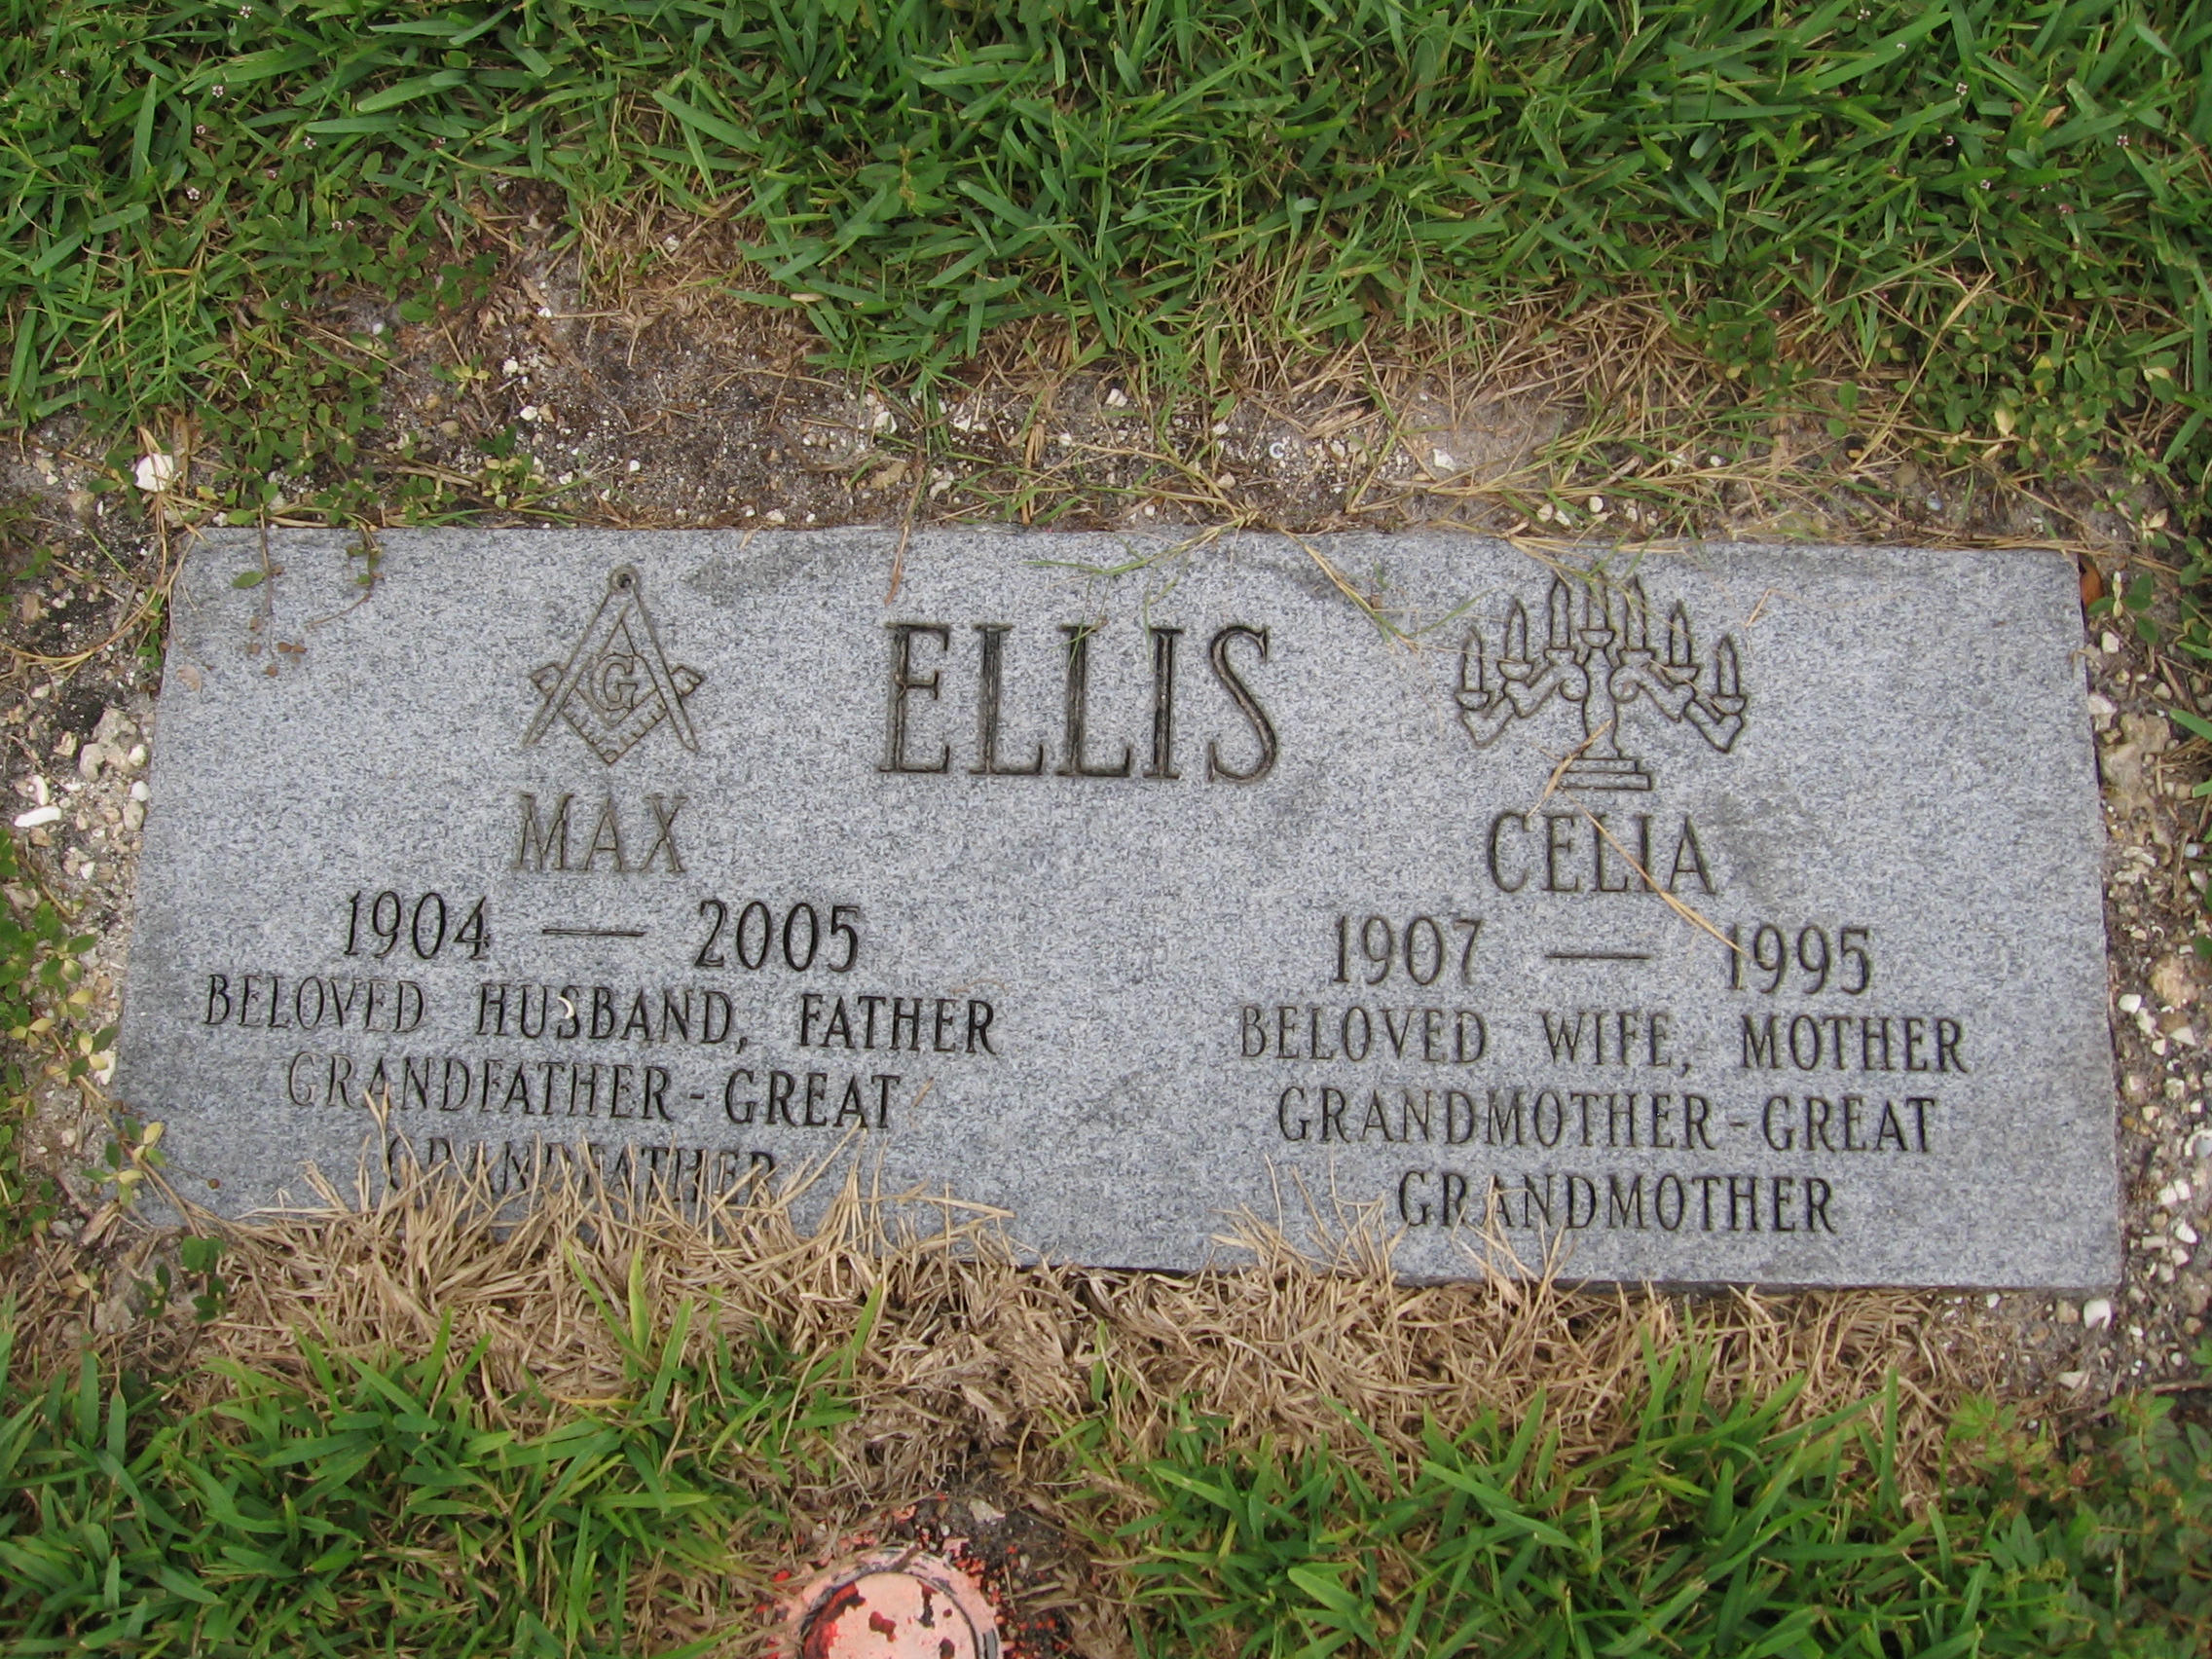 Celia Ellis